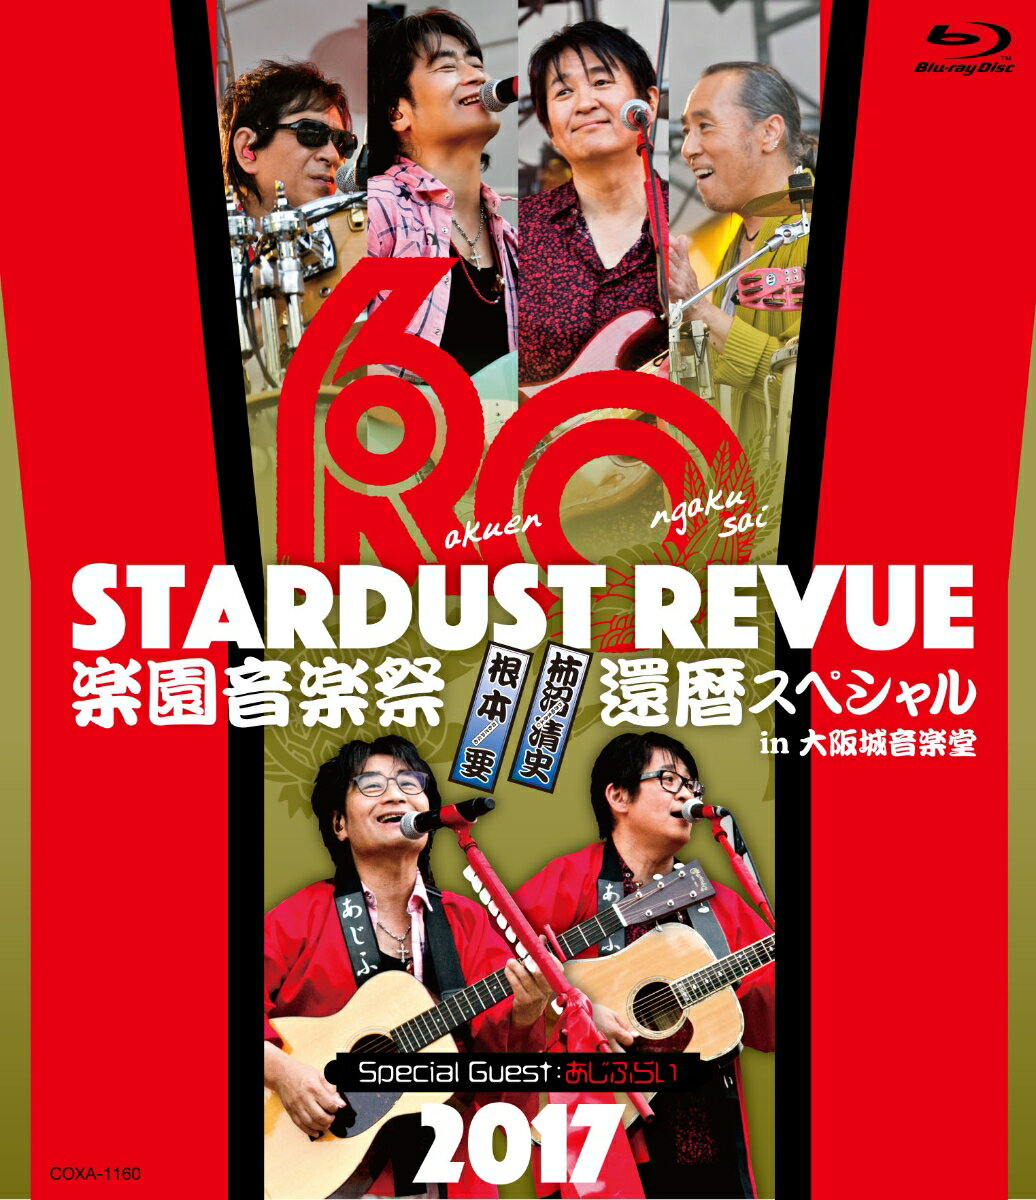 STARDUST REVUE 楽園音楽祭 2017 還暦スペシャル in 大阪城音楽堂【Blu-ray】